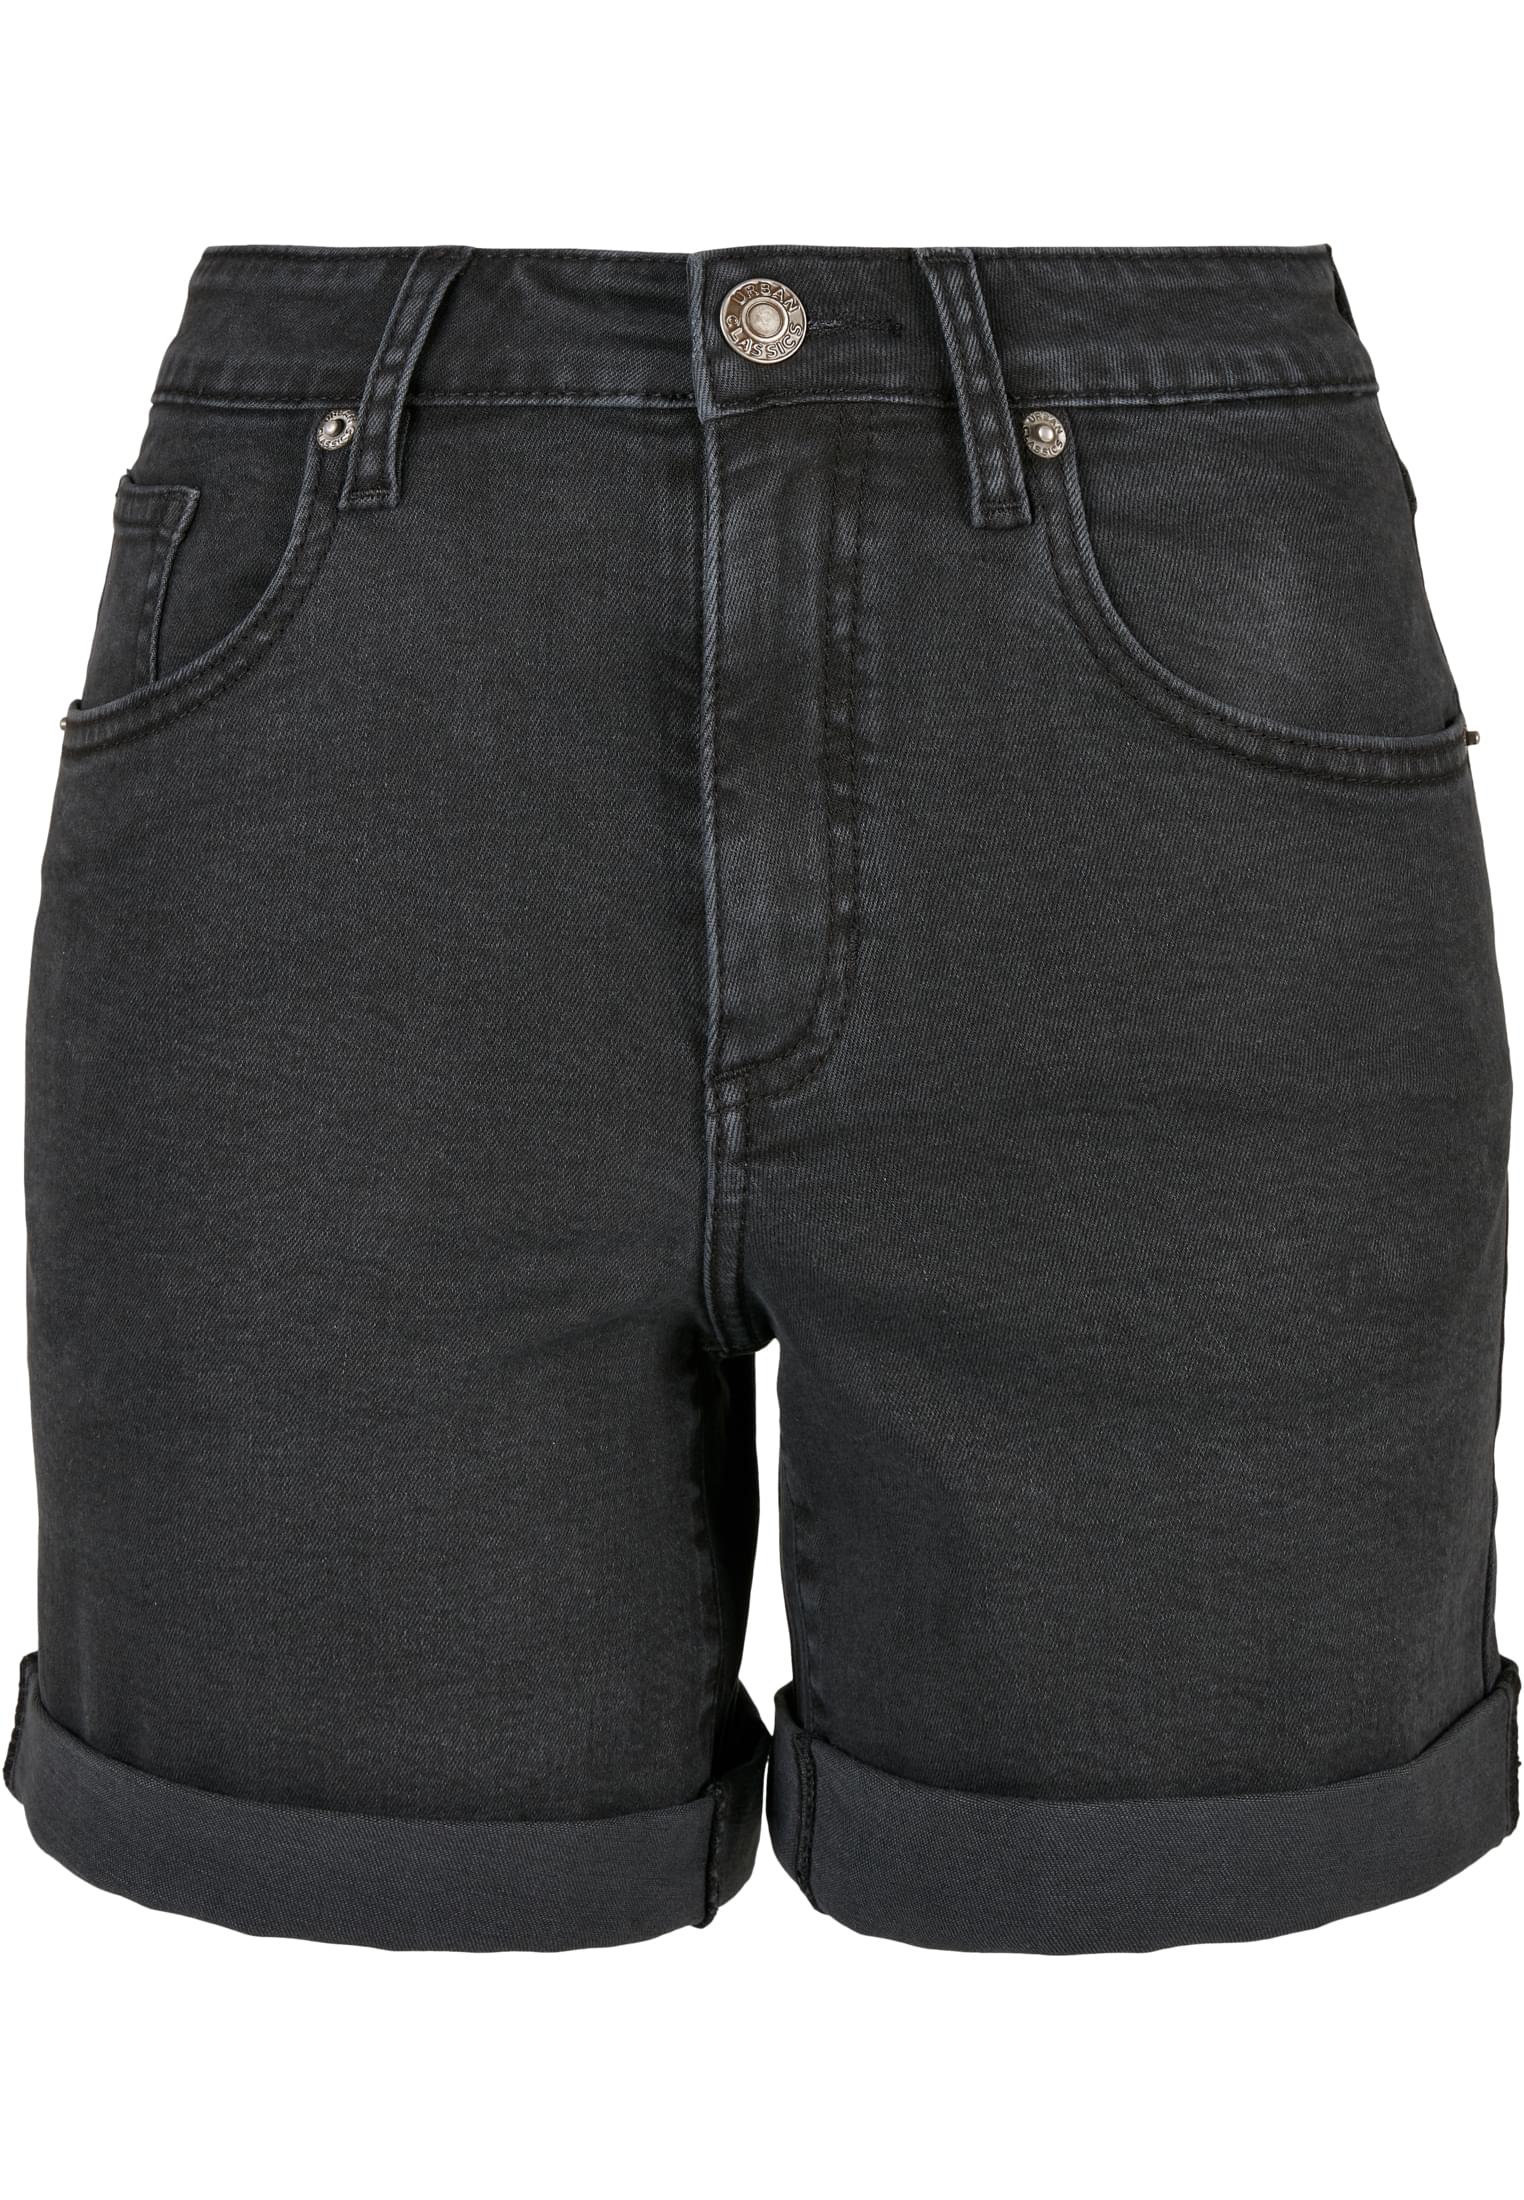 Frauen Ladies Organic Stretch Denim 5 Pocket Shorts in Farbe black washed